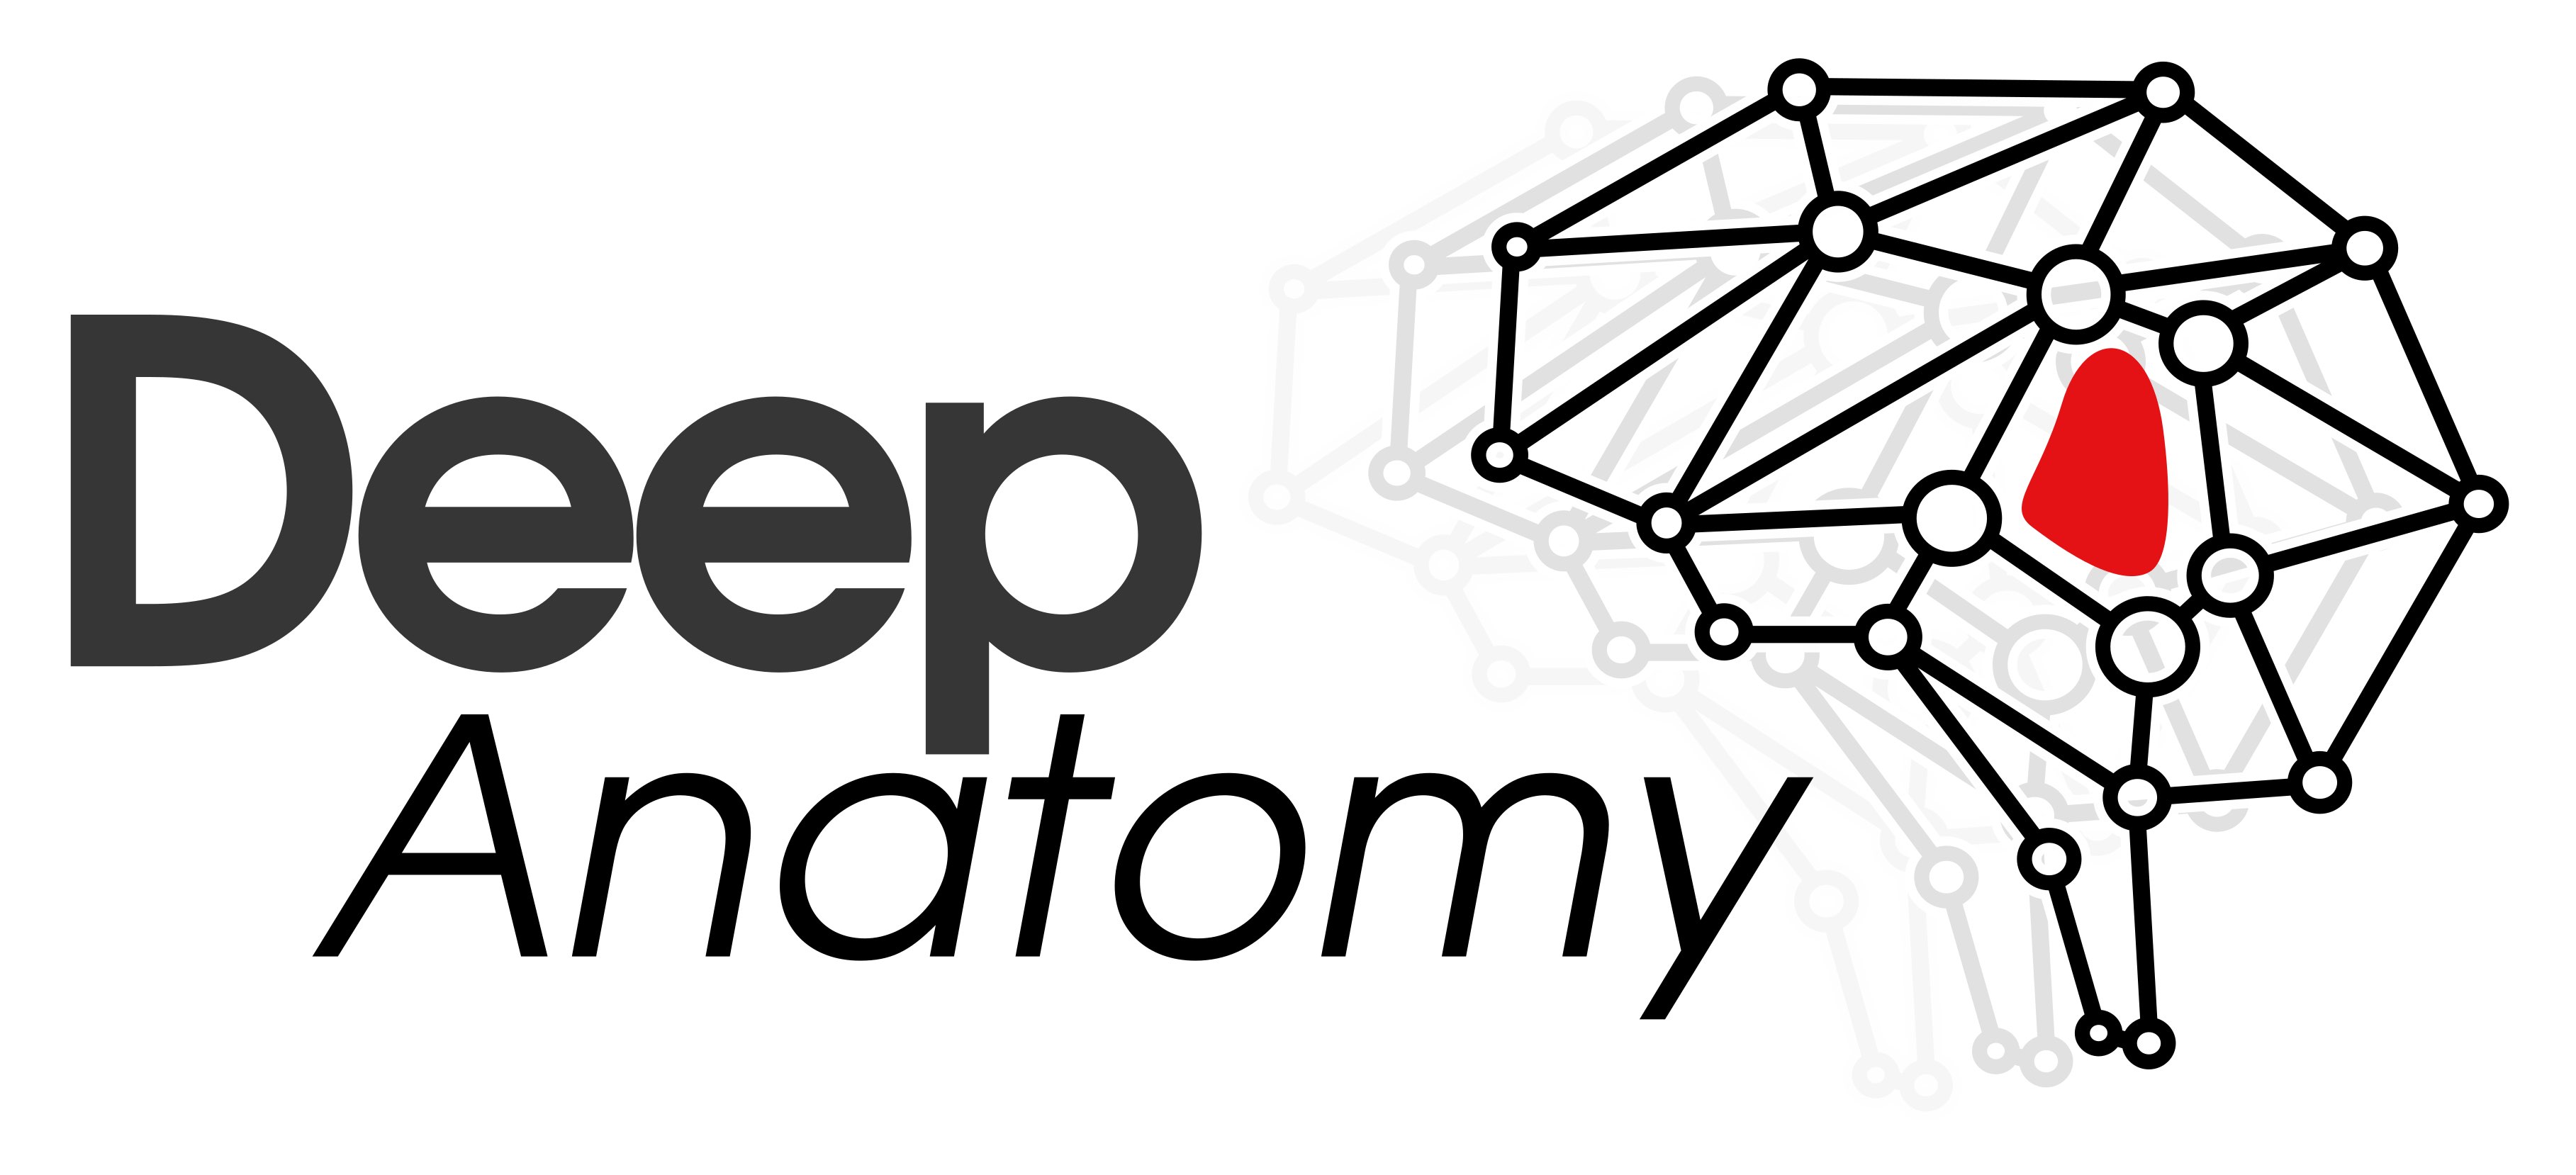 DeepAnatomy Logo